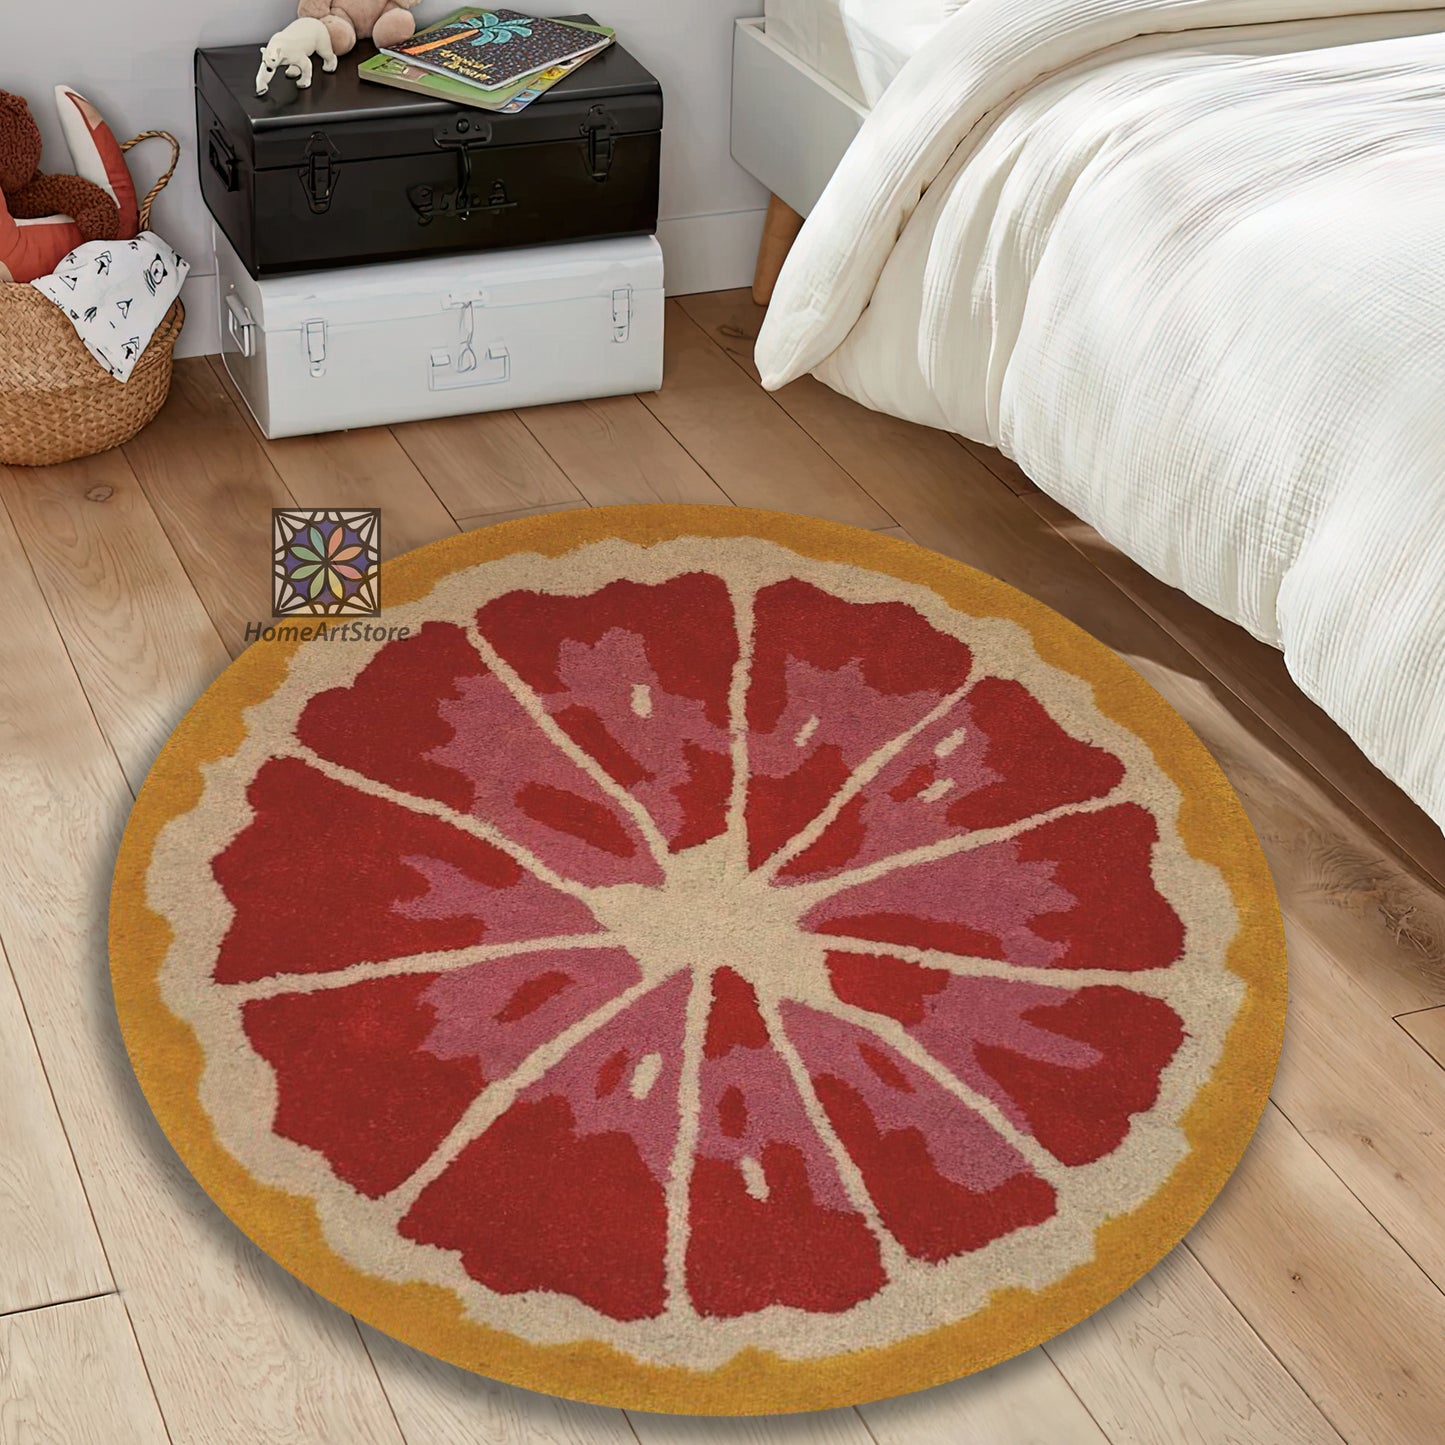 Grapefruit Rug, Kitchen Mat, Colorful Kids Room Carpet, Fruit Themed Decor